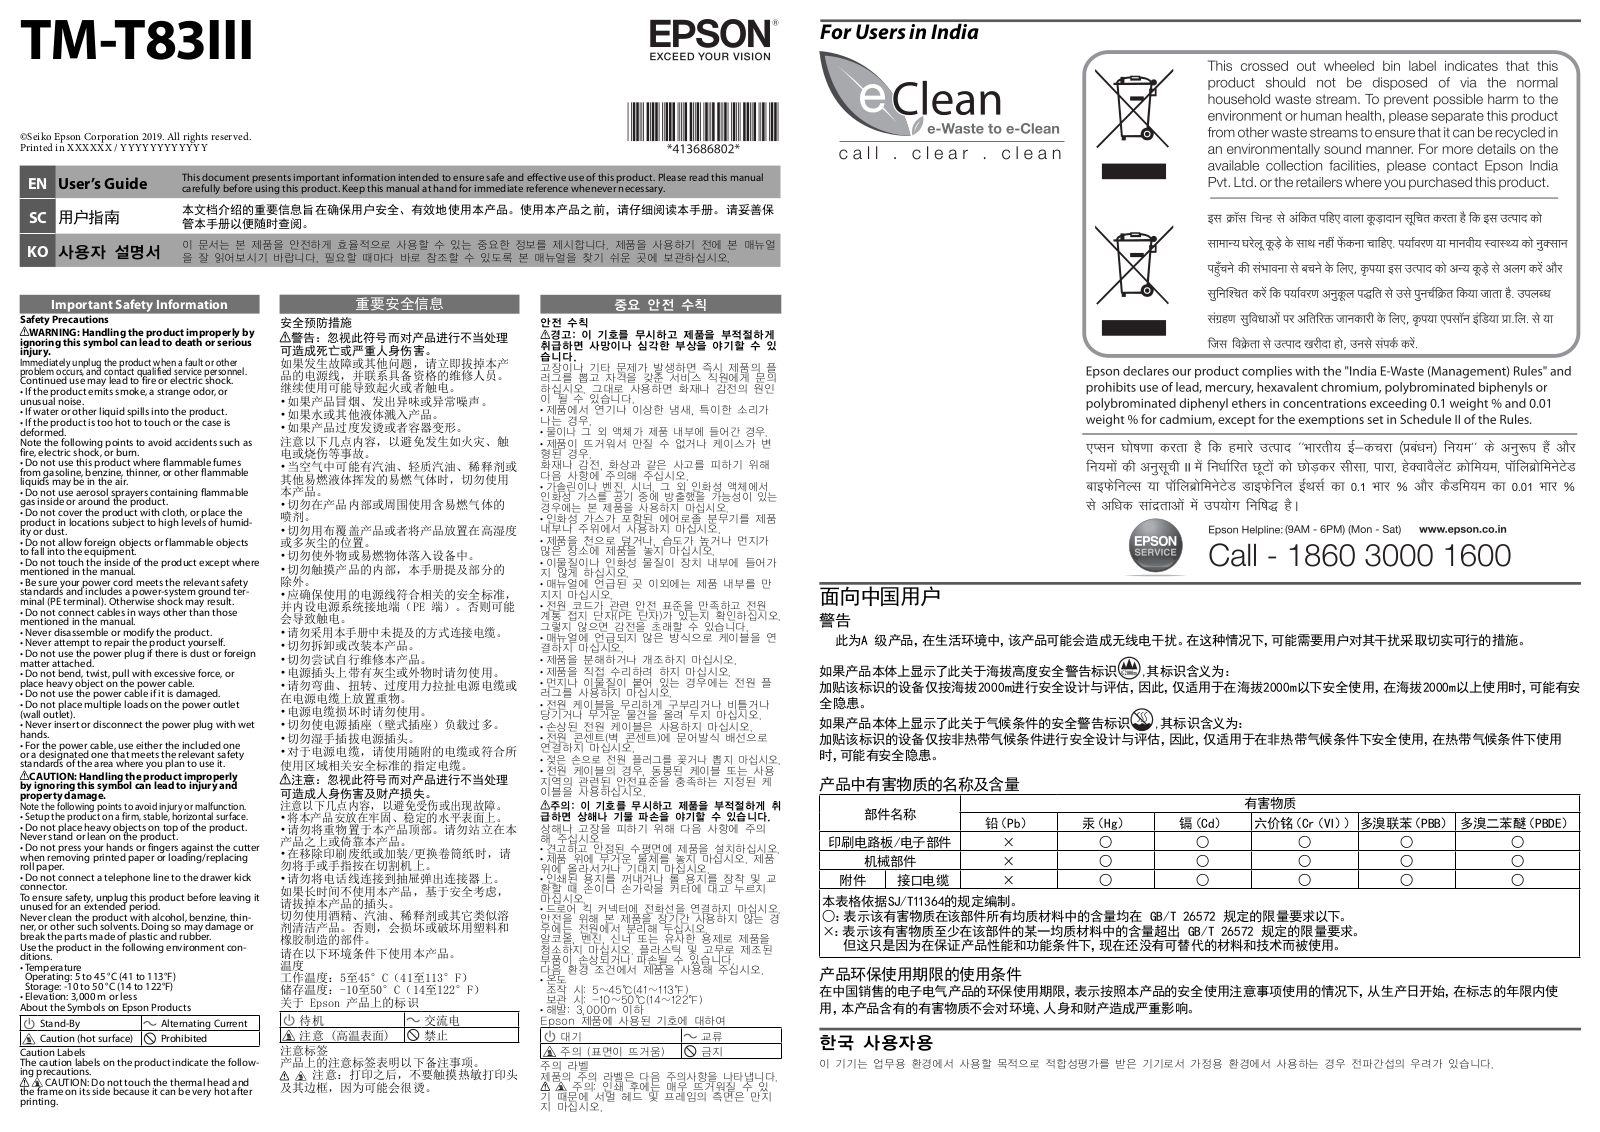 Epson TM-T83III User's Manual